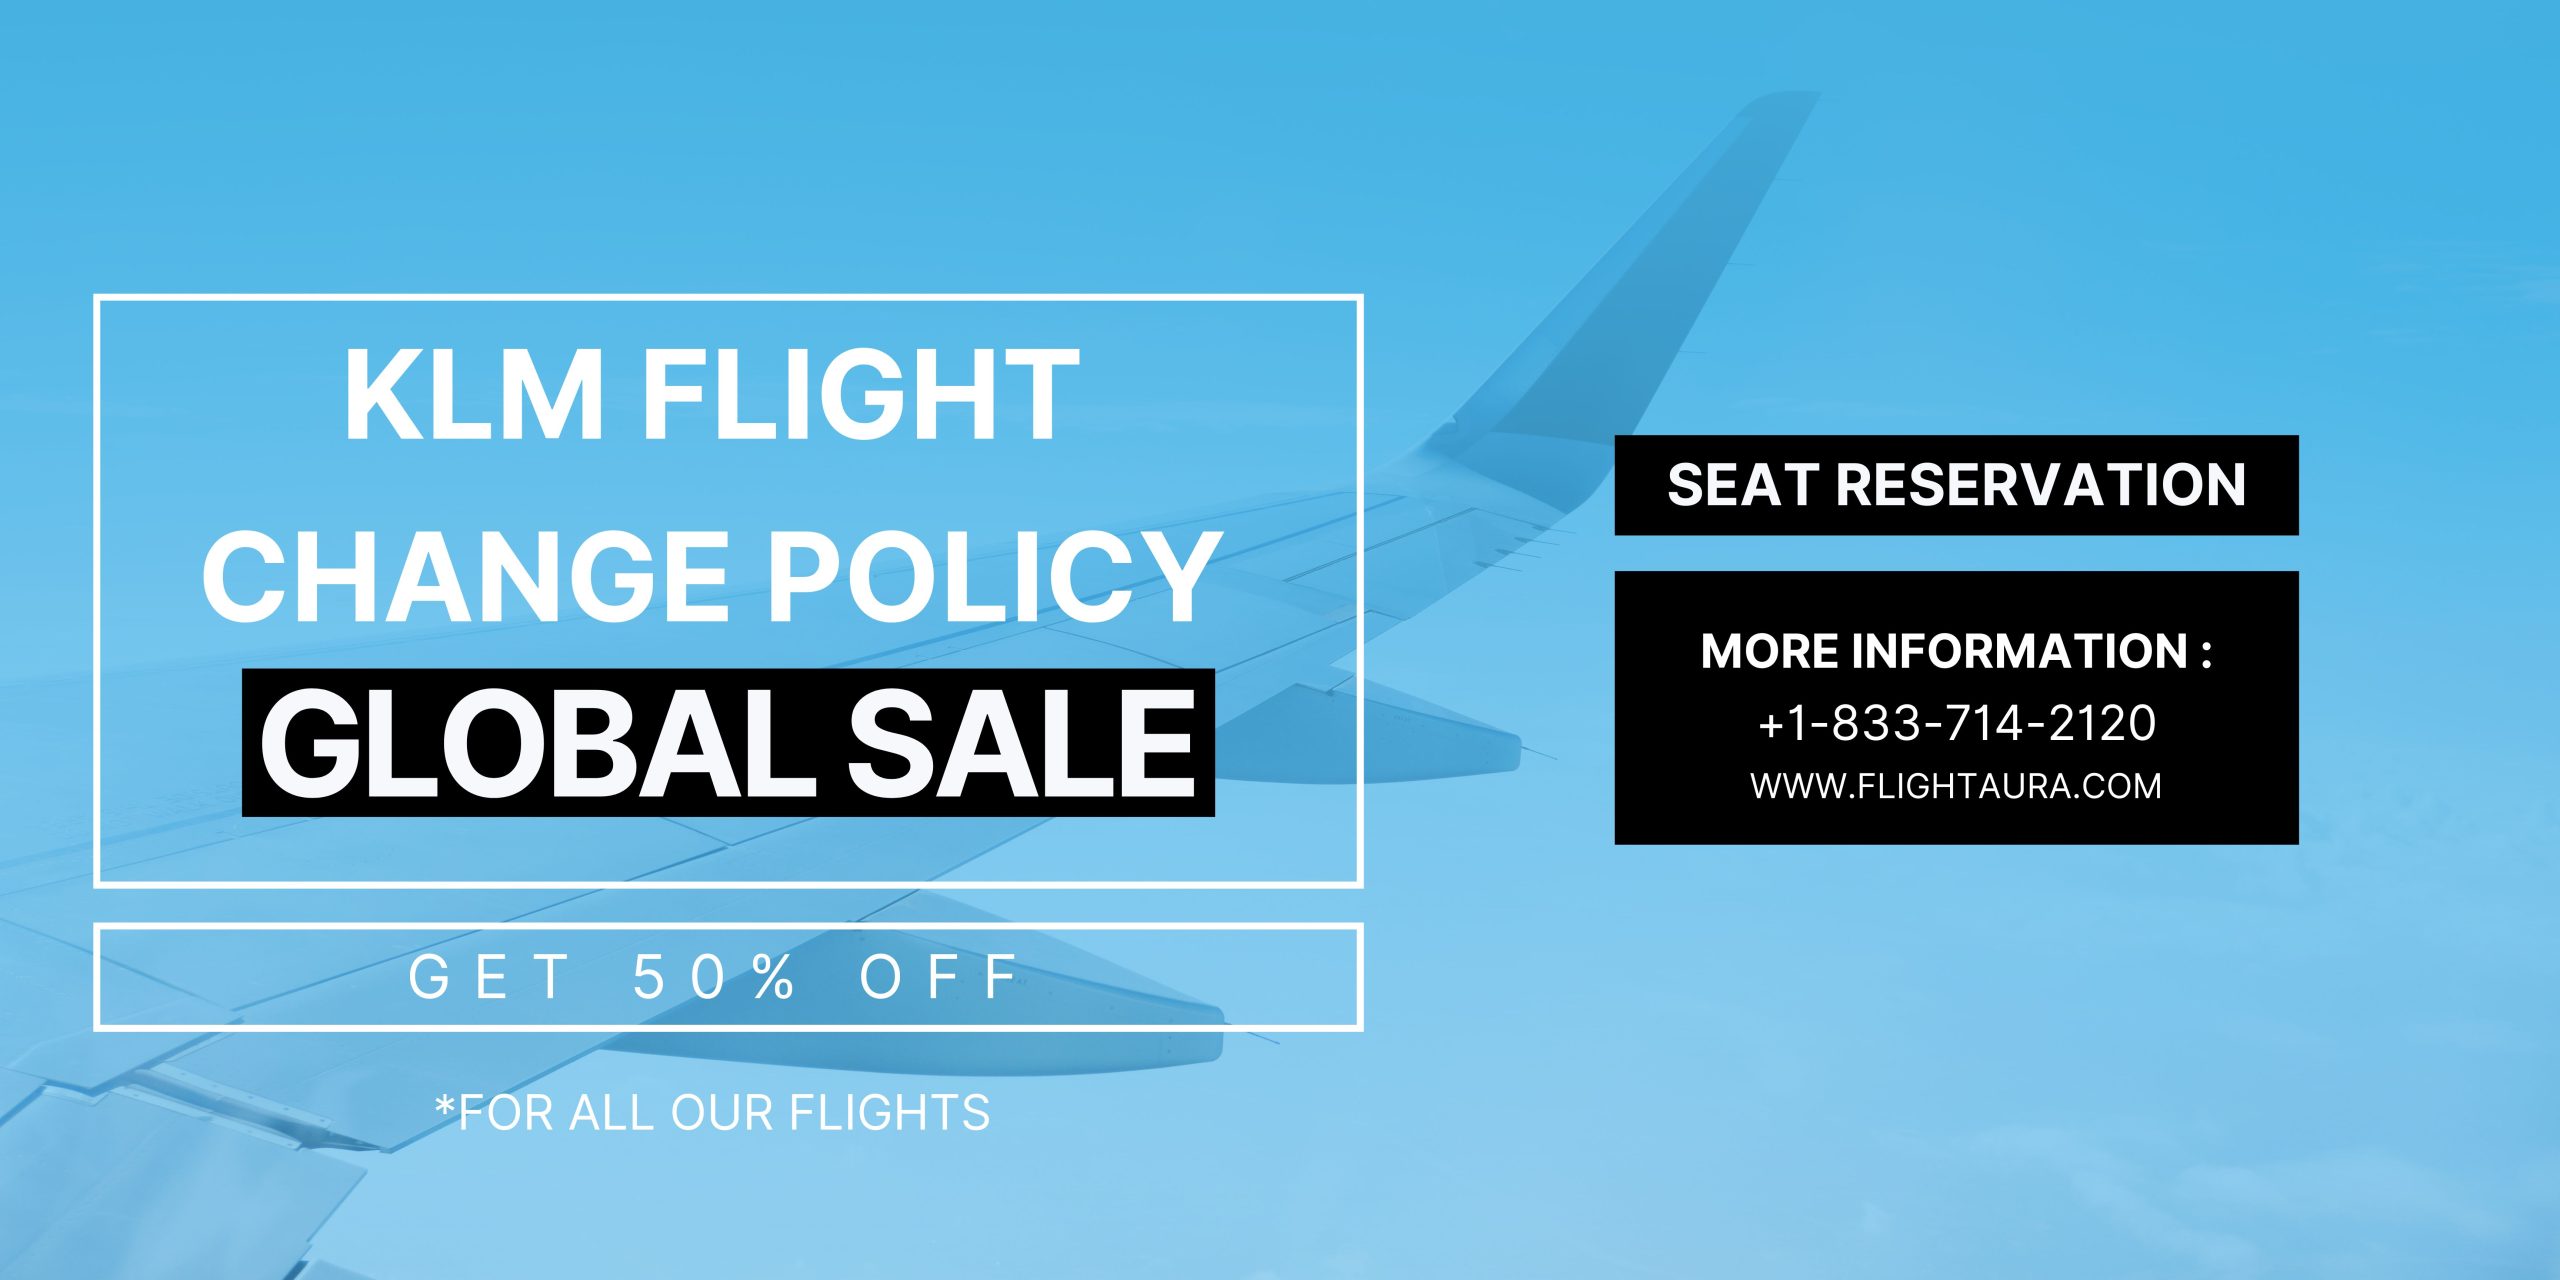 KLM Flight Change Policy